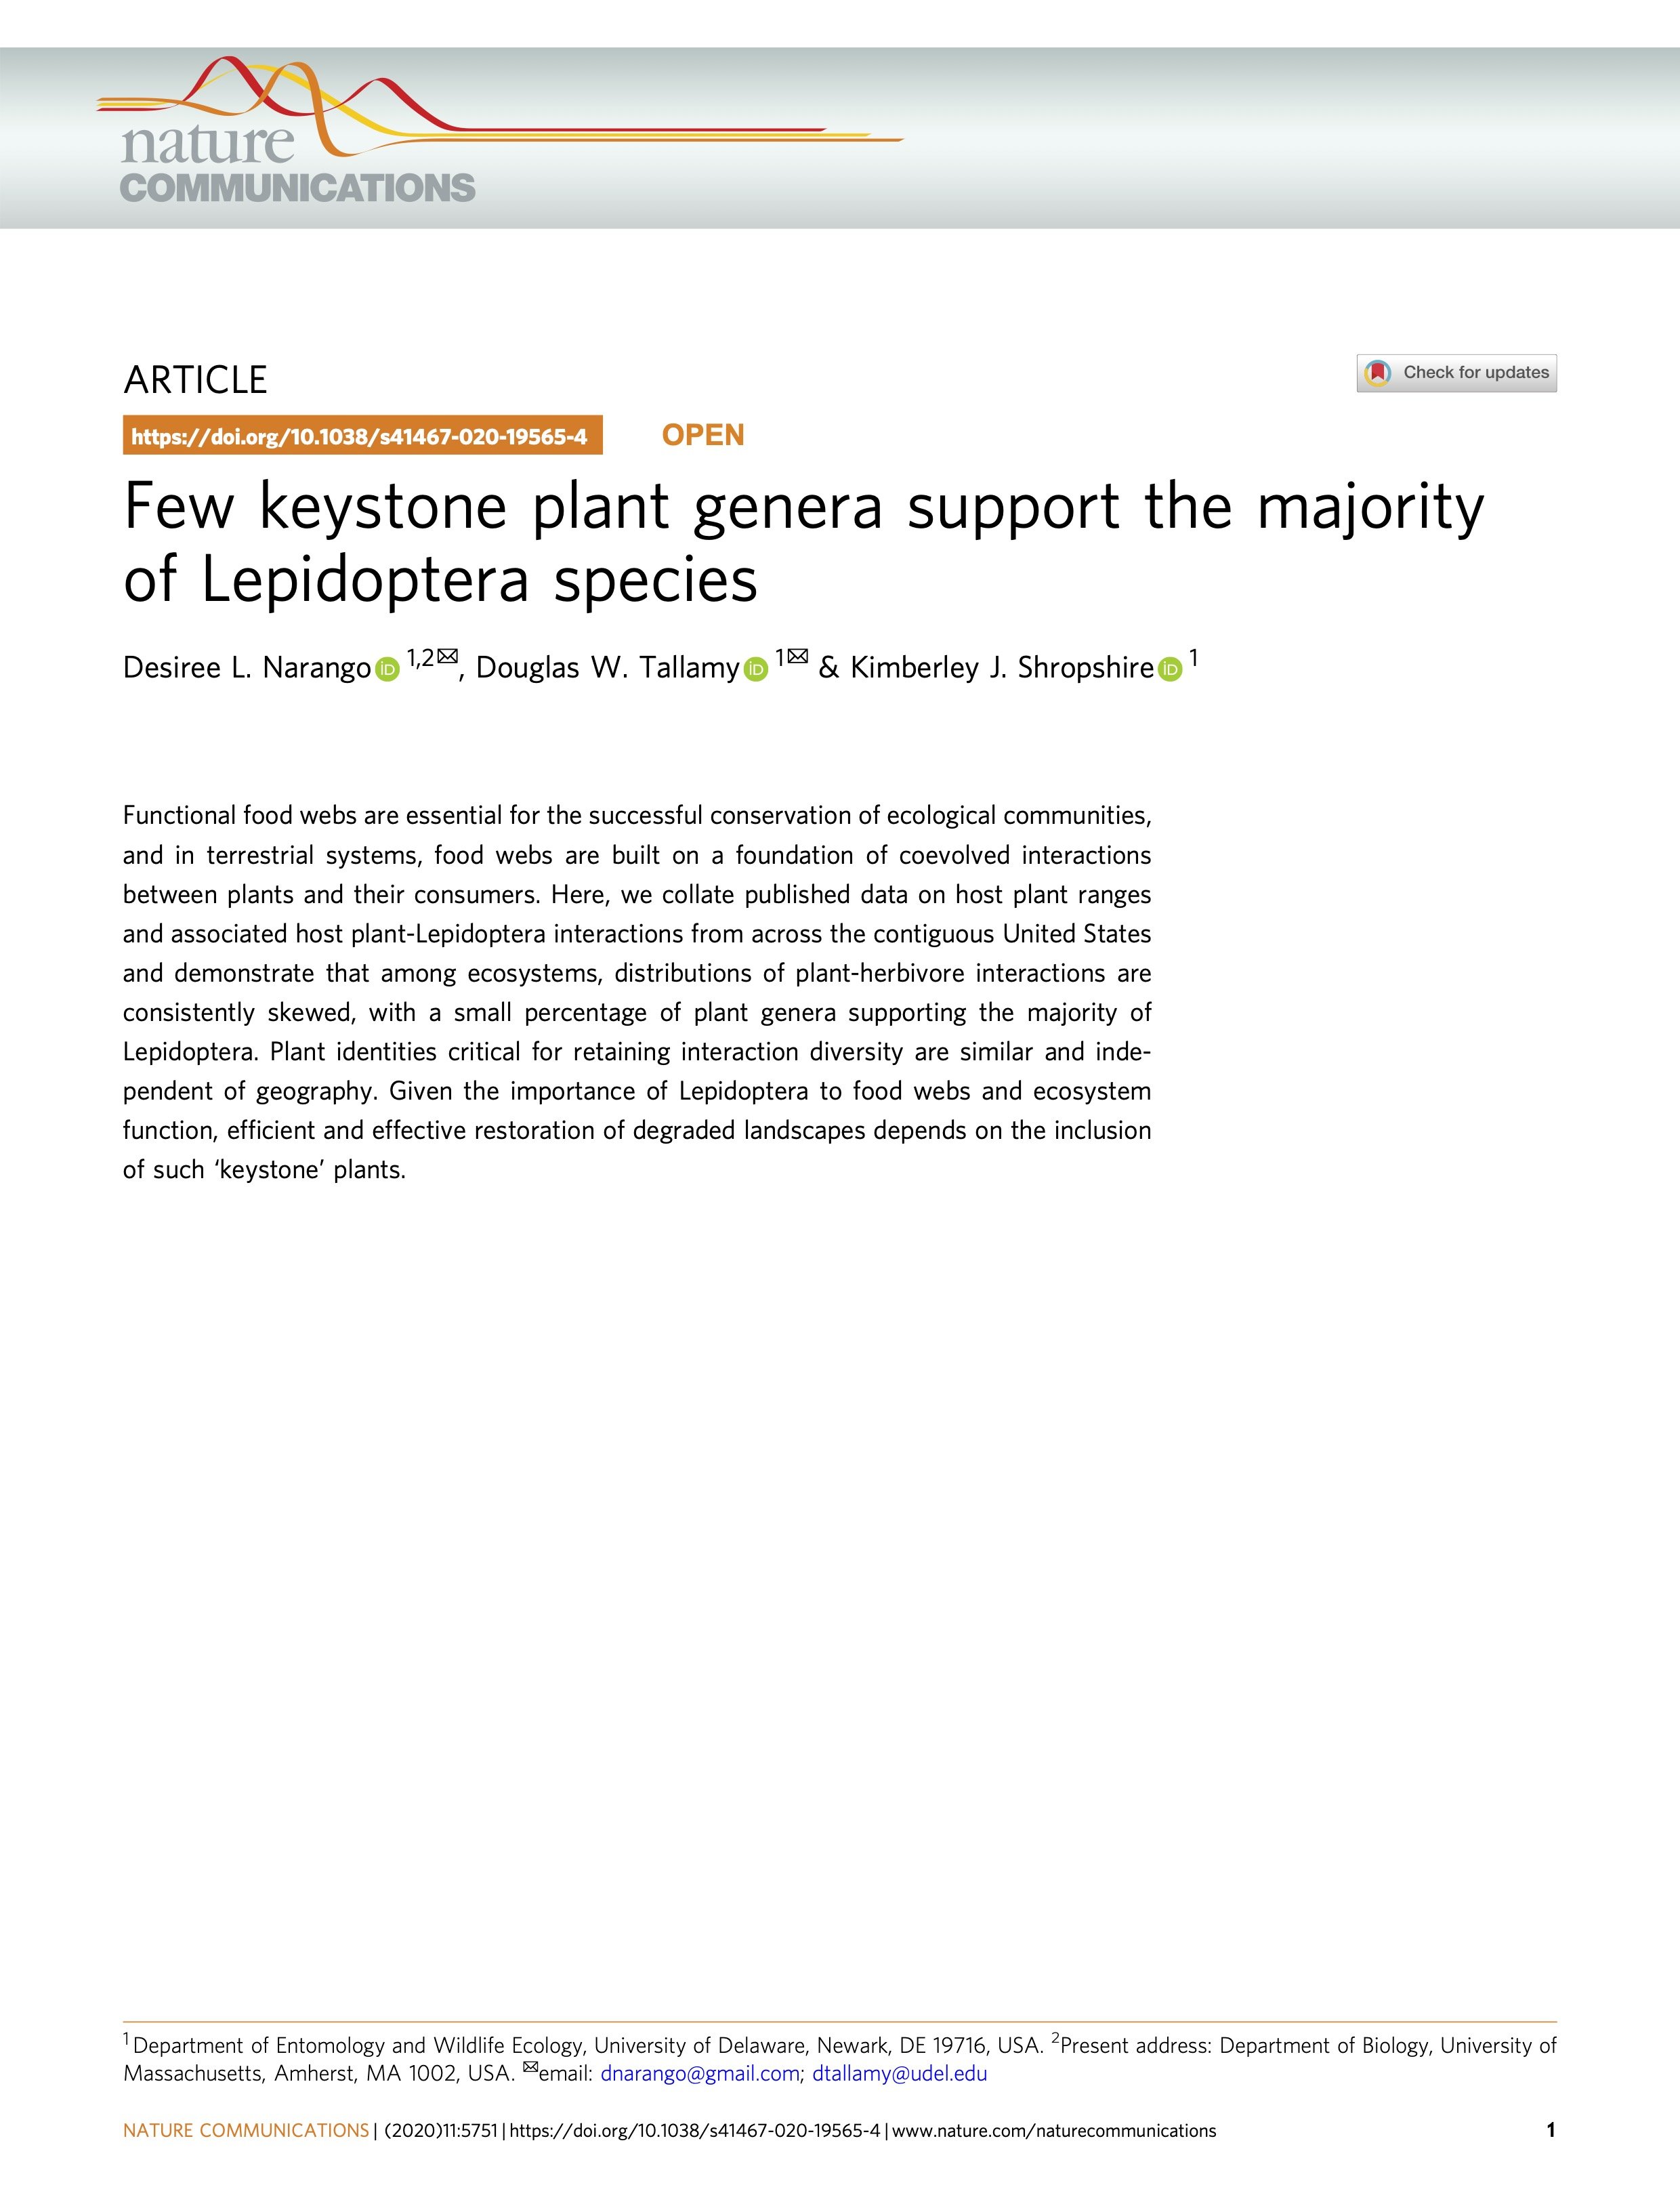 Few keystone plant genera support the majority of Lepidoptera species